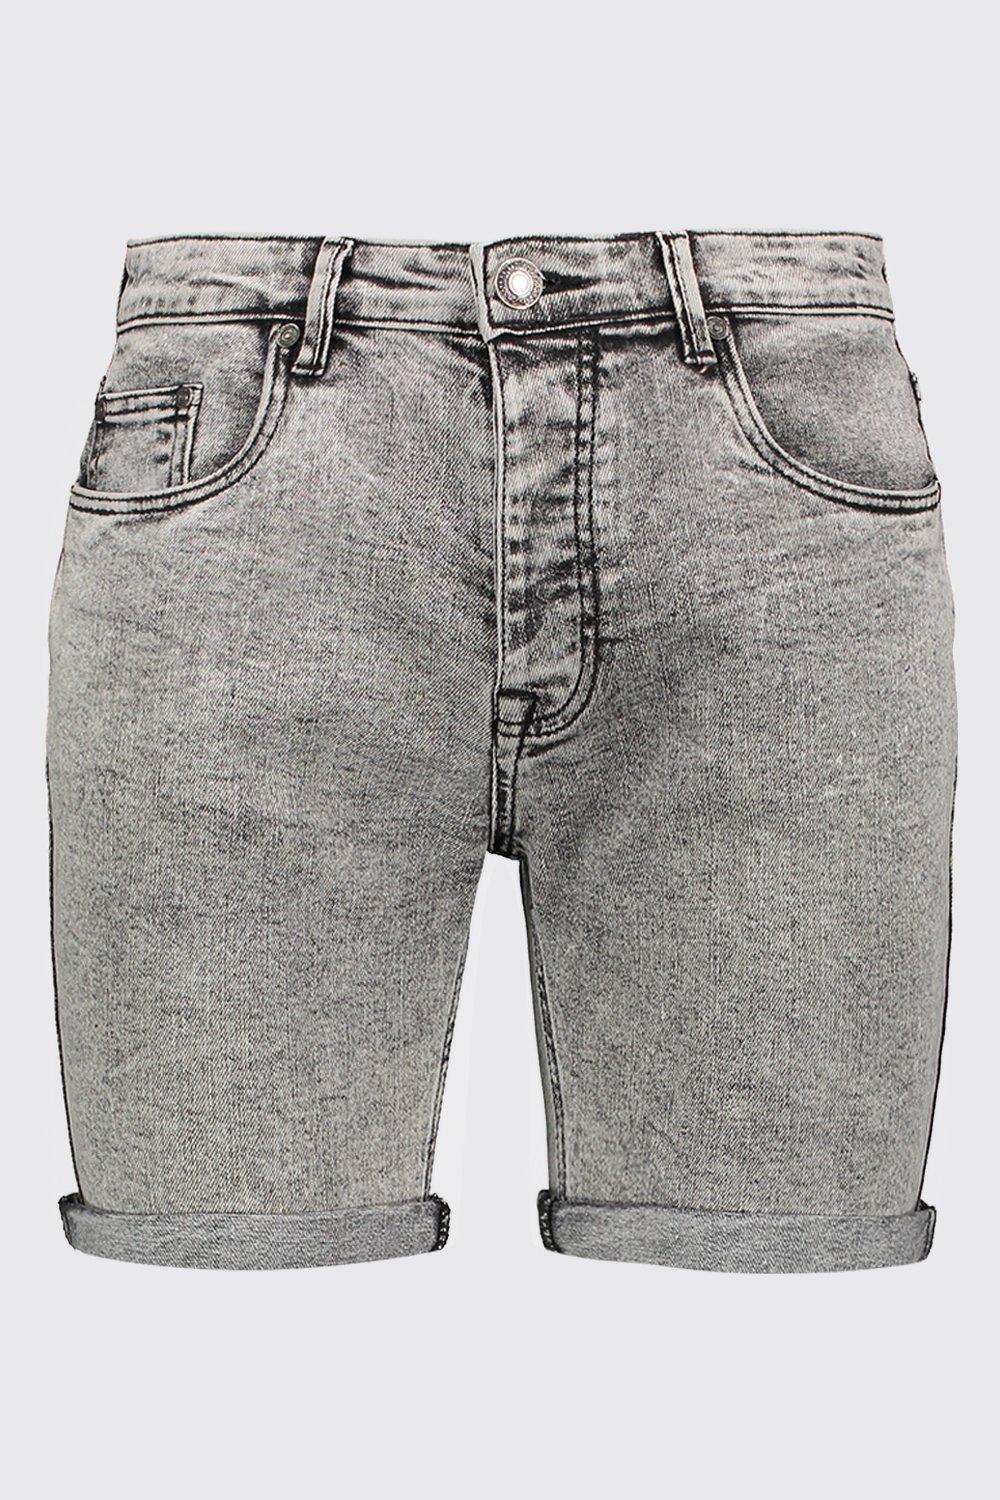 grey jeans shorts